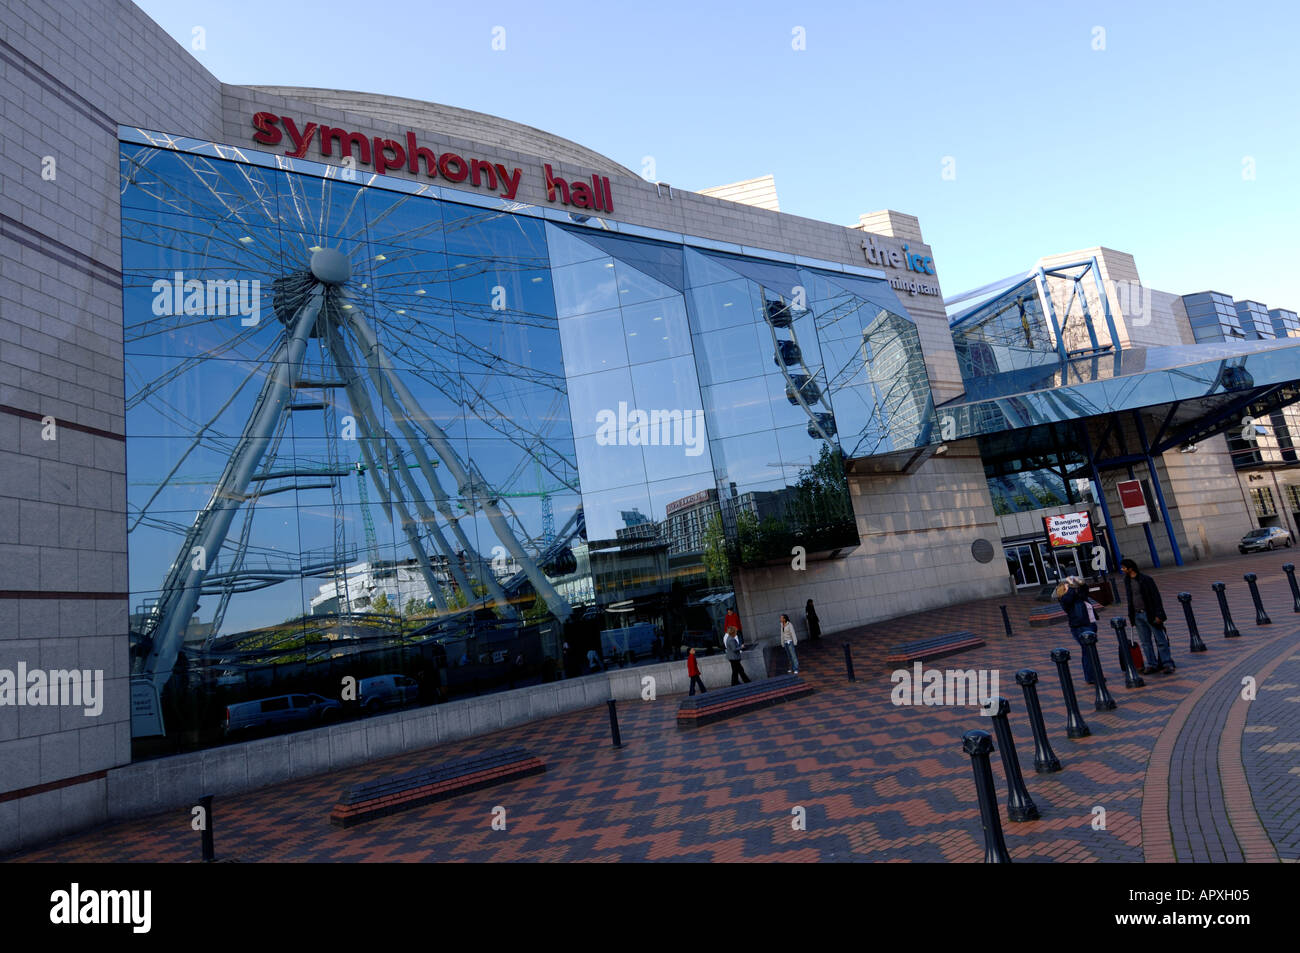 The Symphony Hall Centenary Square Birmingham West Midlands England UK Stock Photo